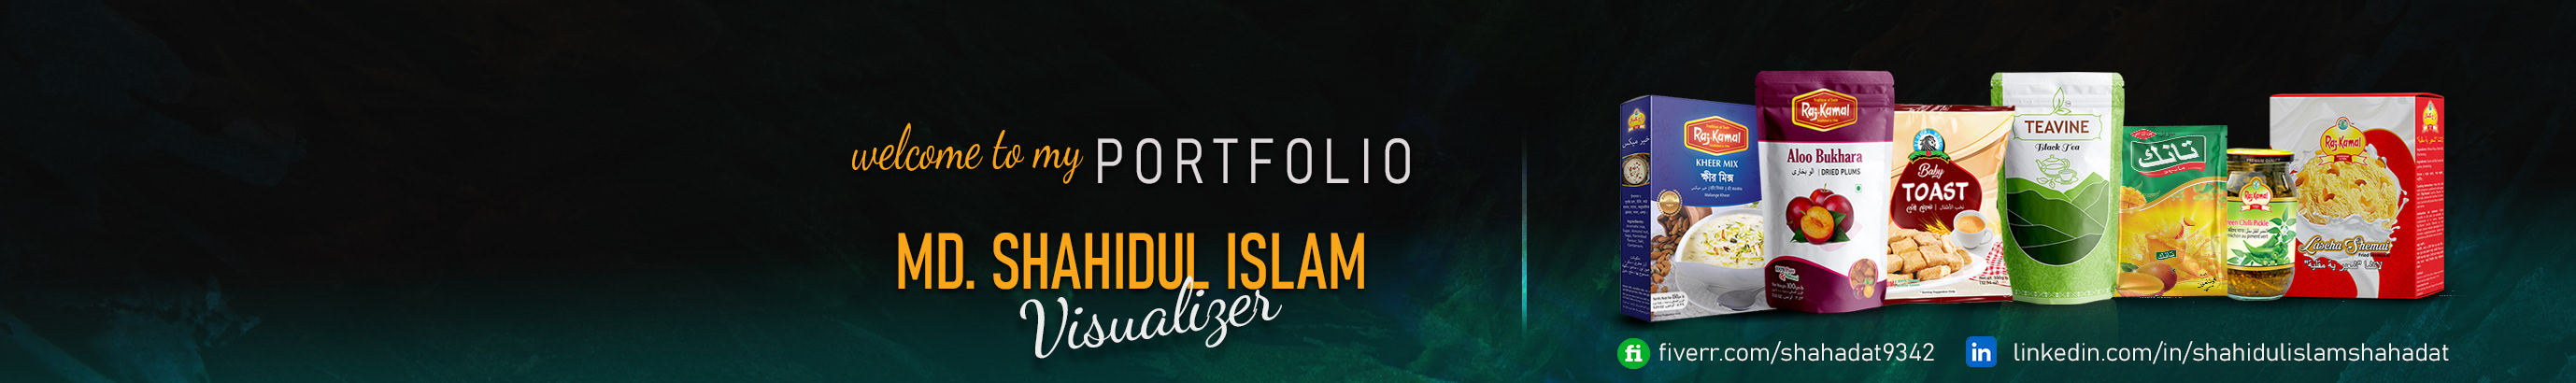 Md. Shahidul Islam Shahadats profilbanner